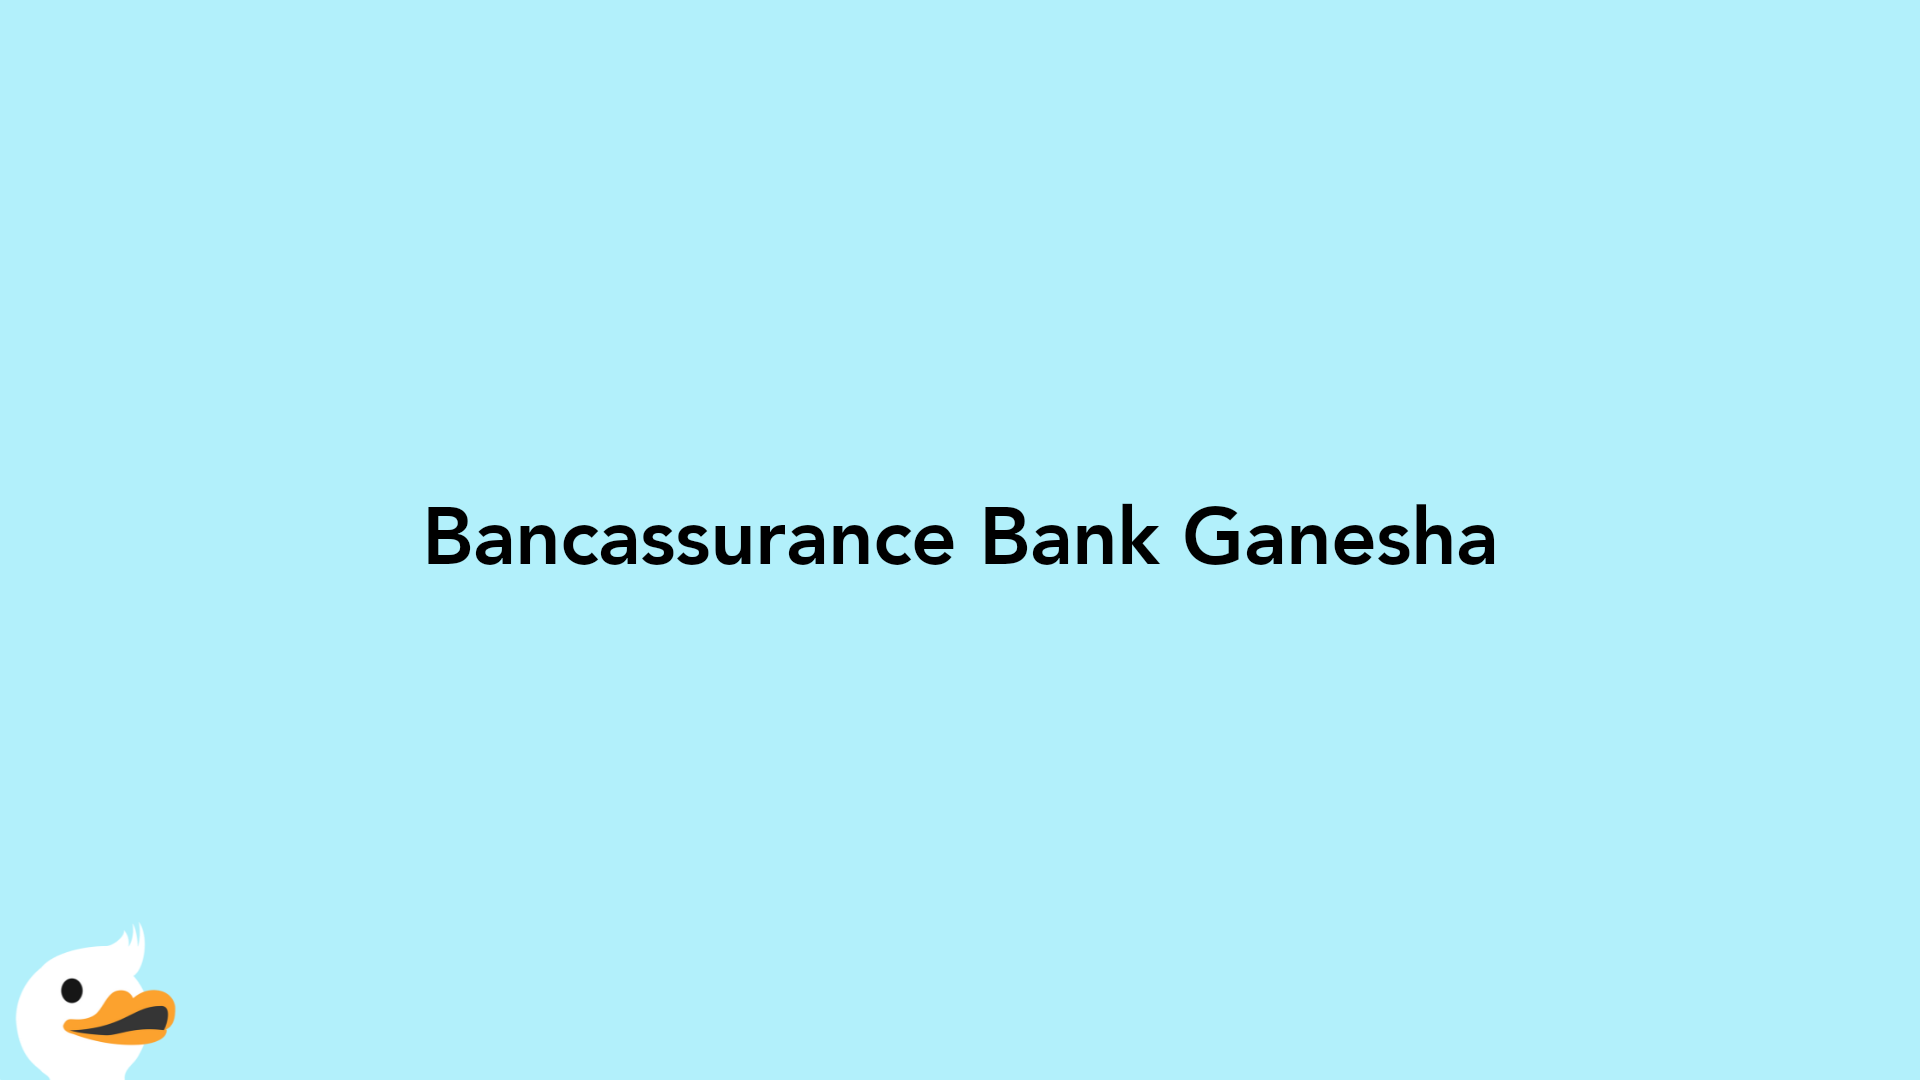 Bancassurance Bank Ganesha